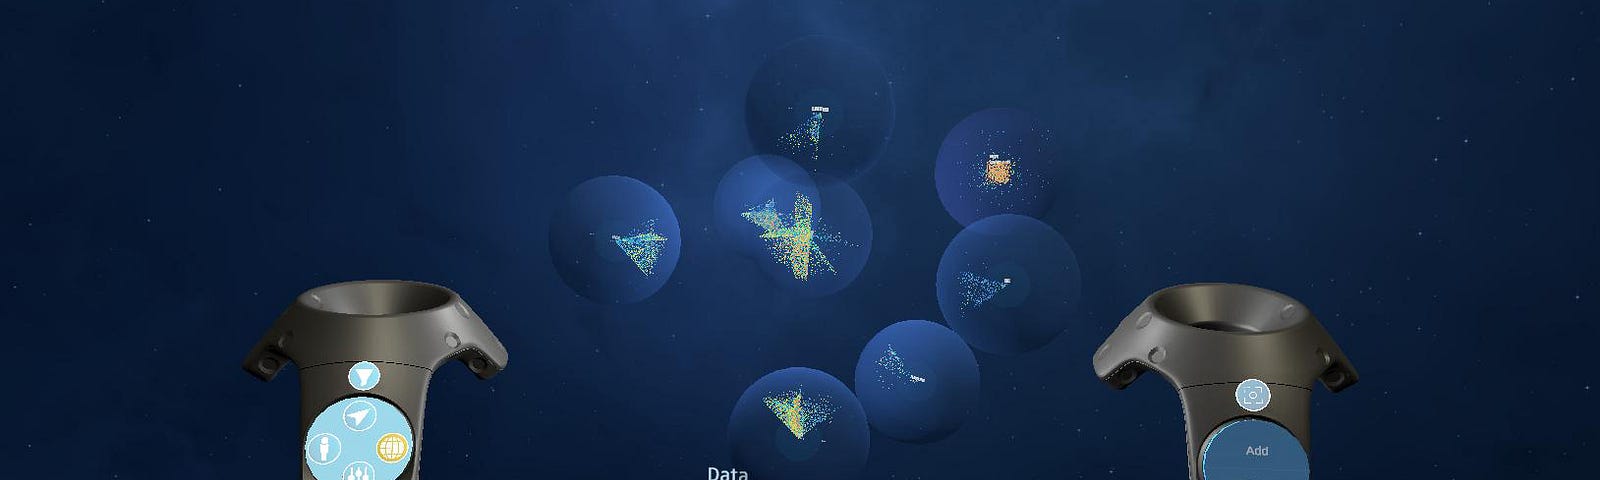 Screenshot from the Virtual Data Cosmos